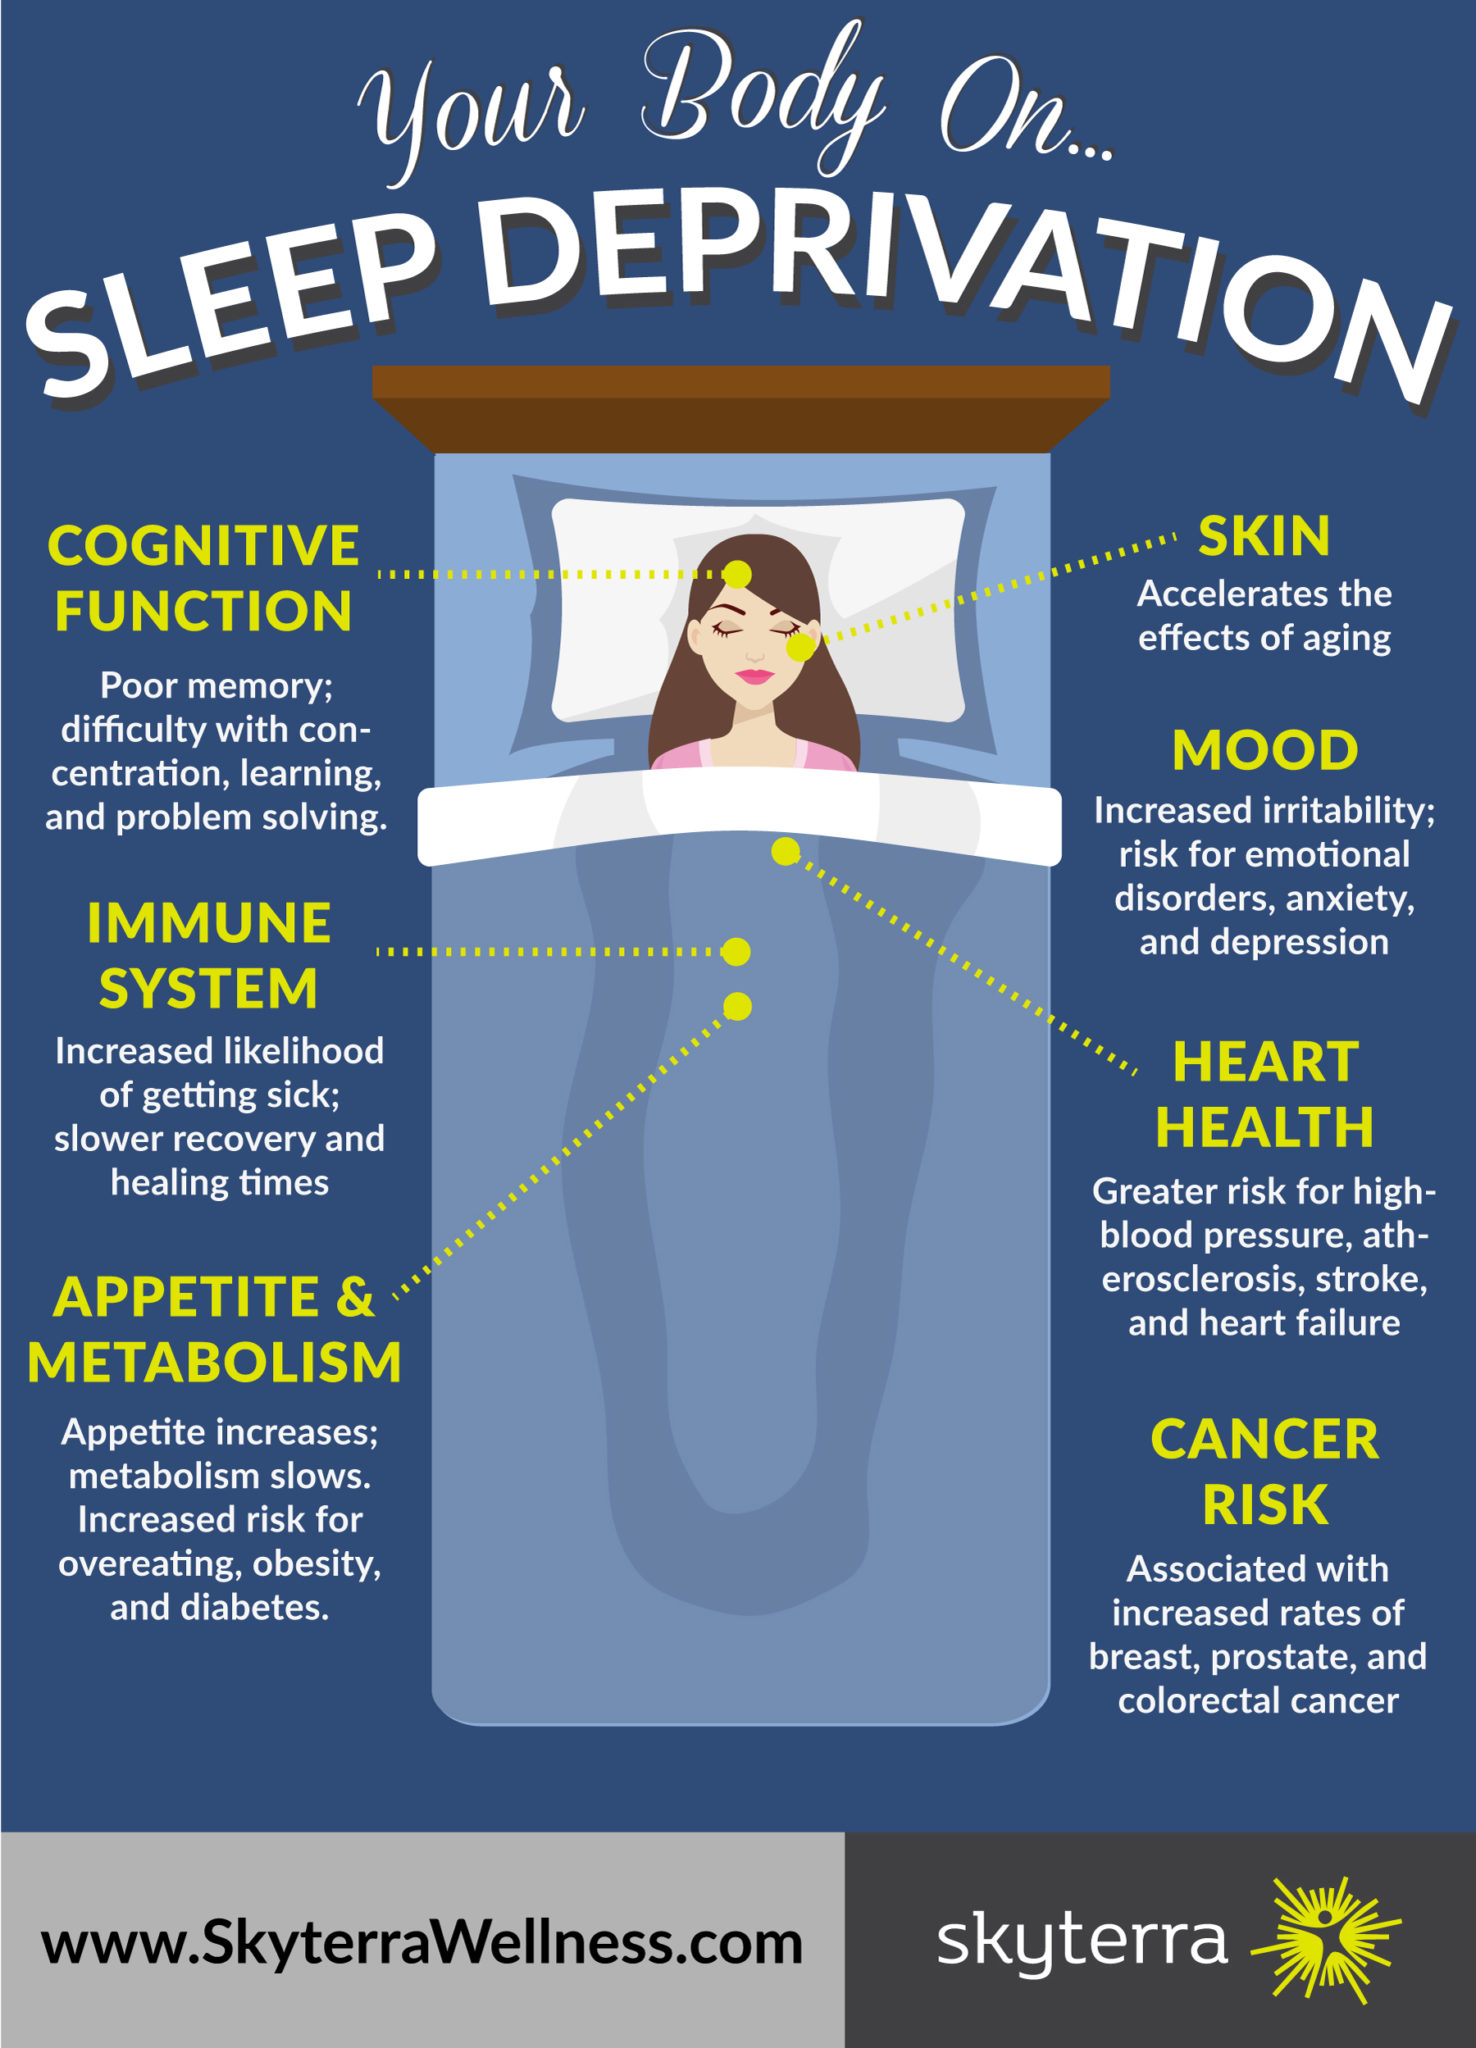 Sleep is a workplace wellness issue